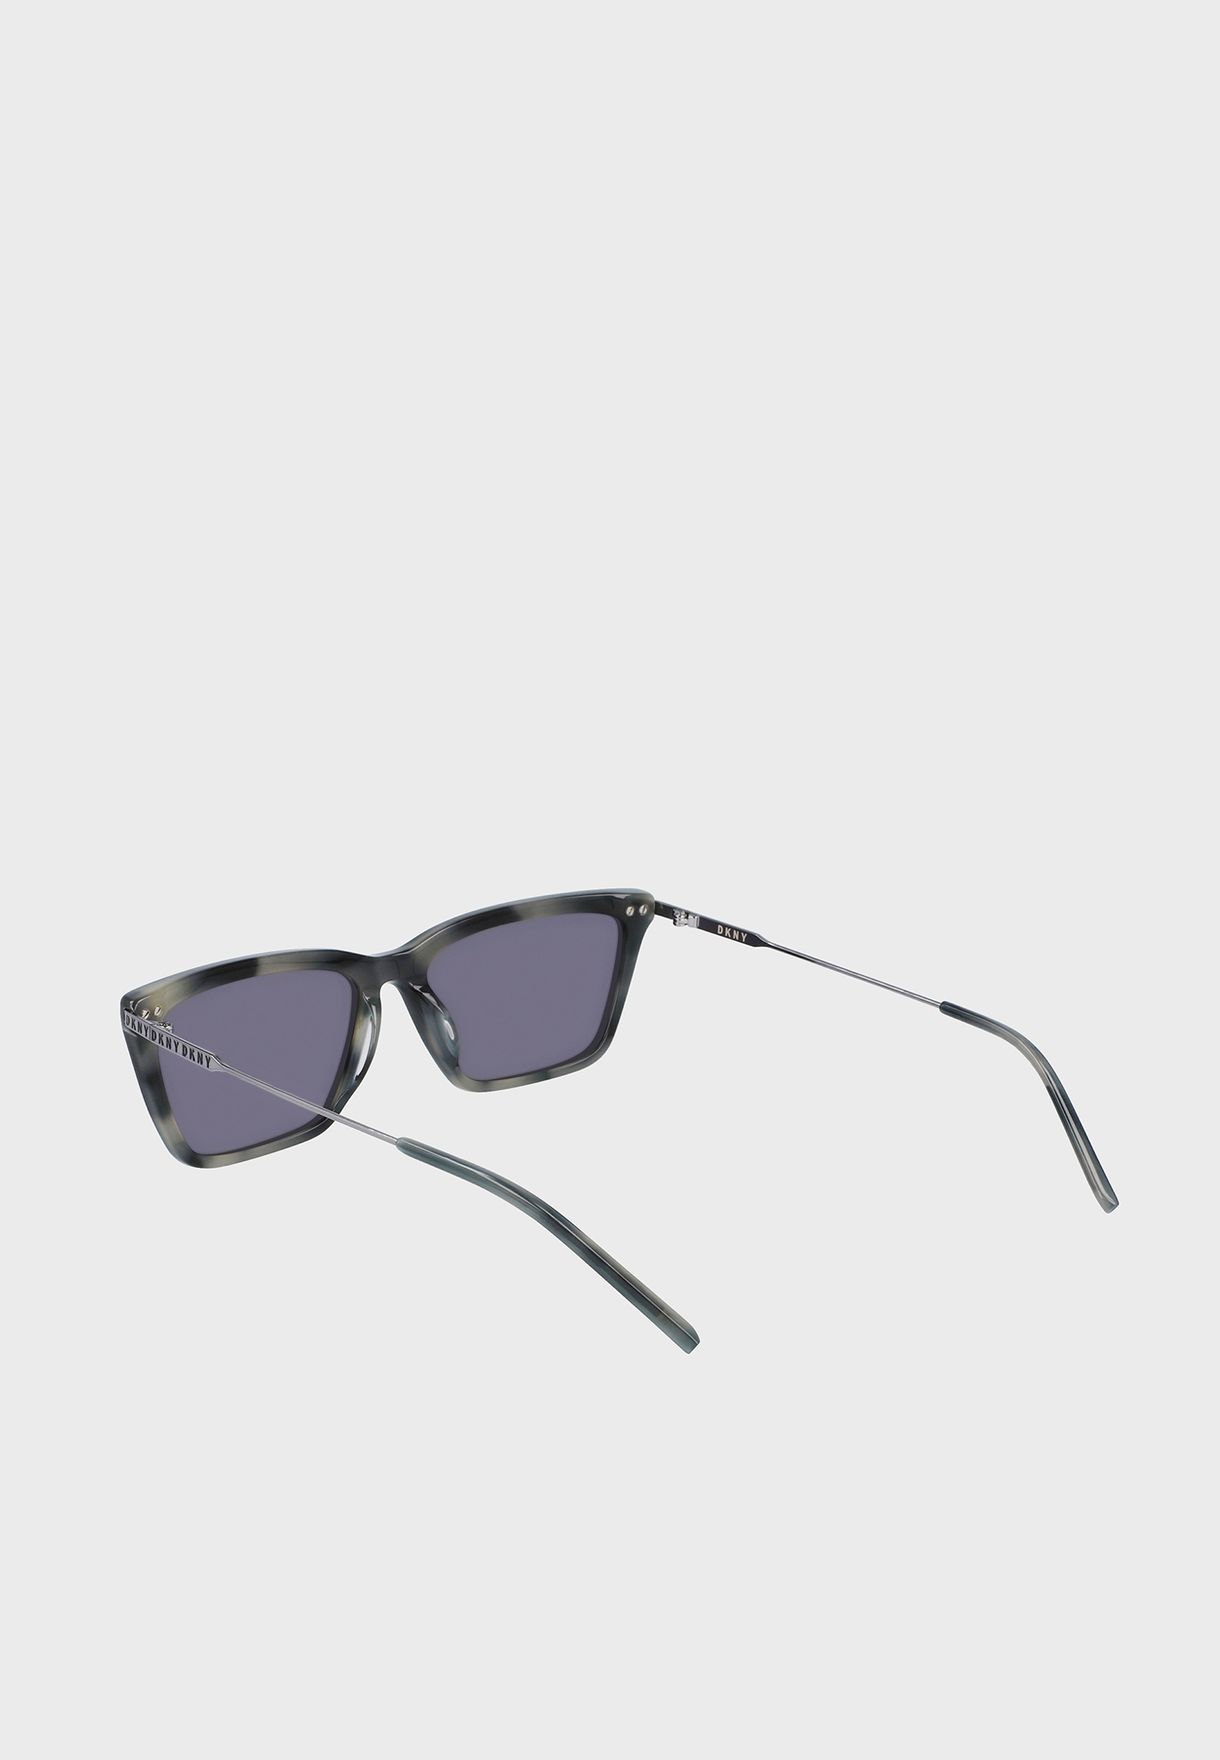 DK709S Oval Shape Sunglasses